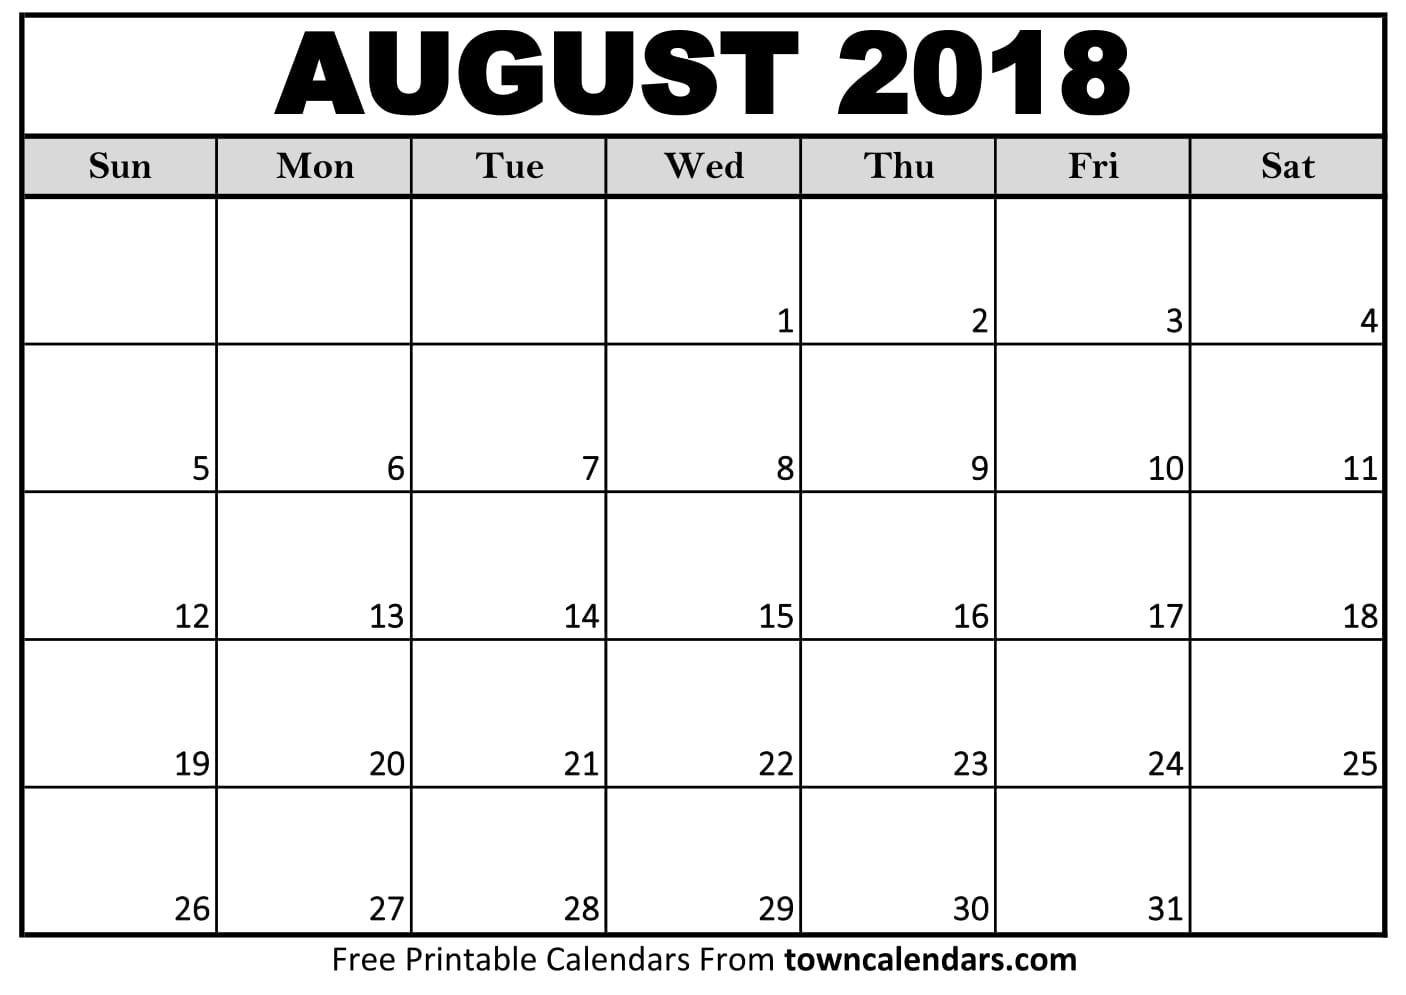 Printable August 2018 Calendar Towncalendars